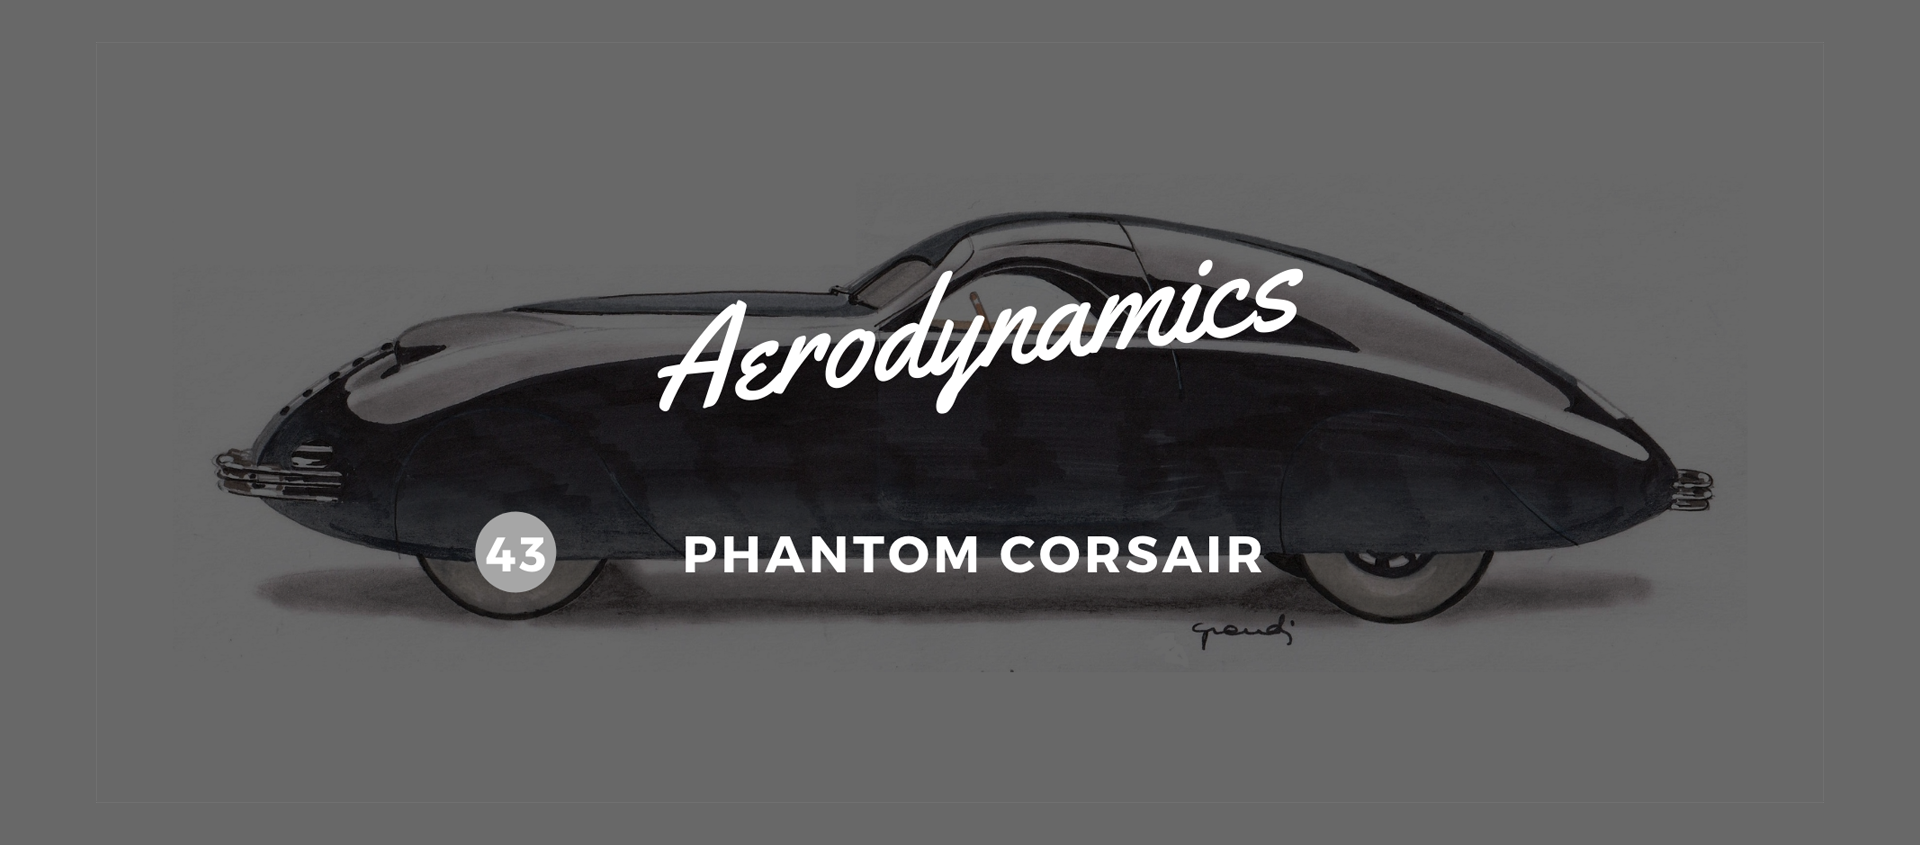 The Phantom Corsair. A fleeting dream image